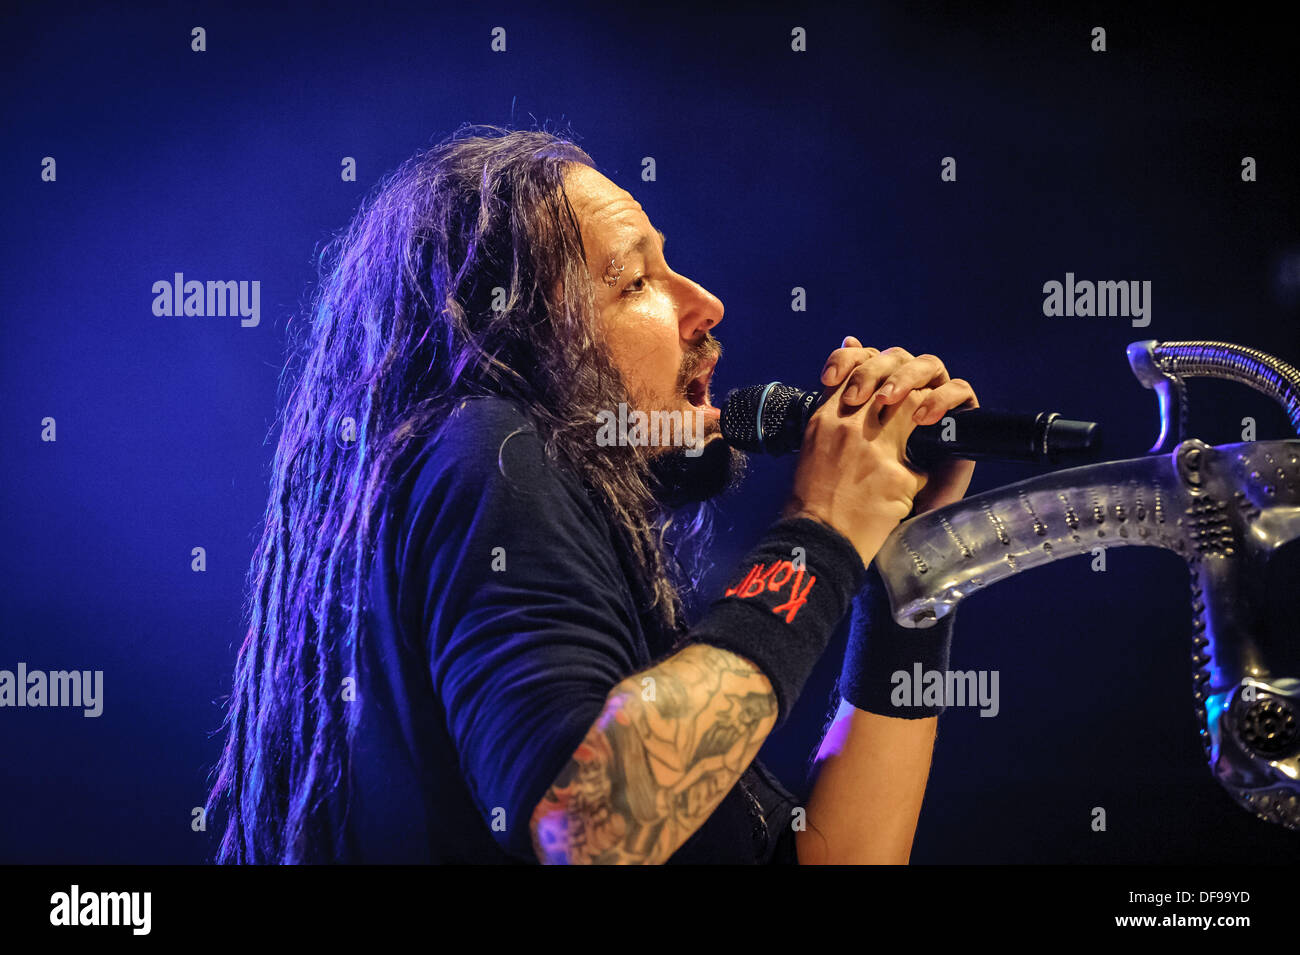 Toronto, Ontario, Canada. 30th Sep, 2013. JONATHAN DAVIS, lead singer for American metal band KORN performs on stage at Sound Academy in Toronto. © Igor Vidyashev/ZUMAPRESS.com/Alamy Live News Stock Photo